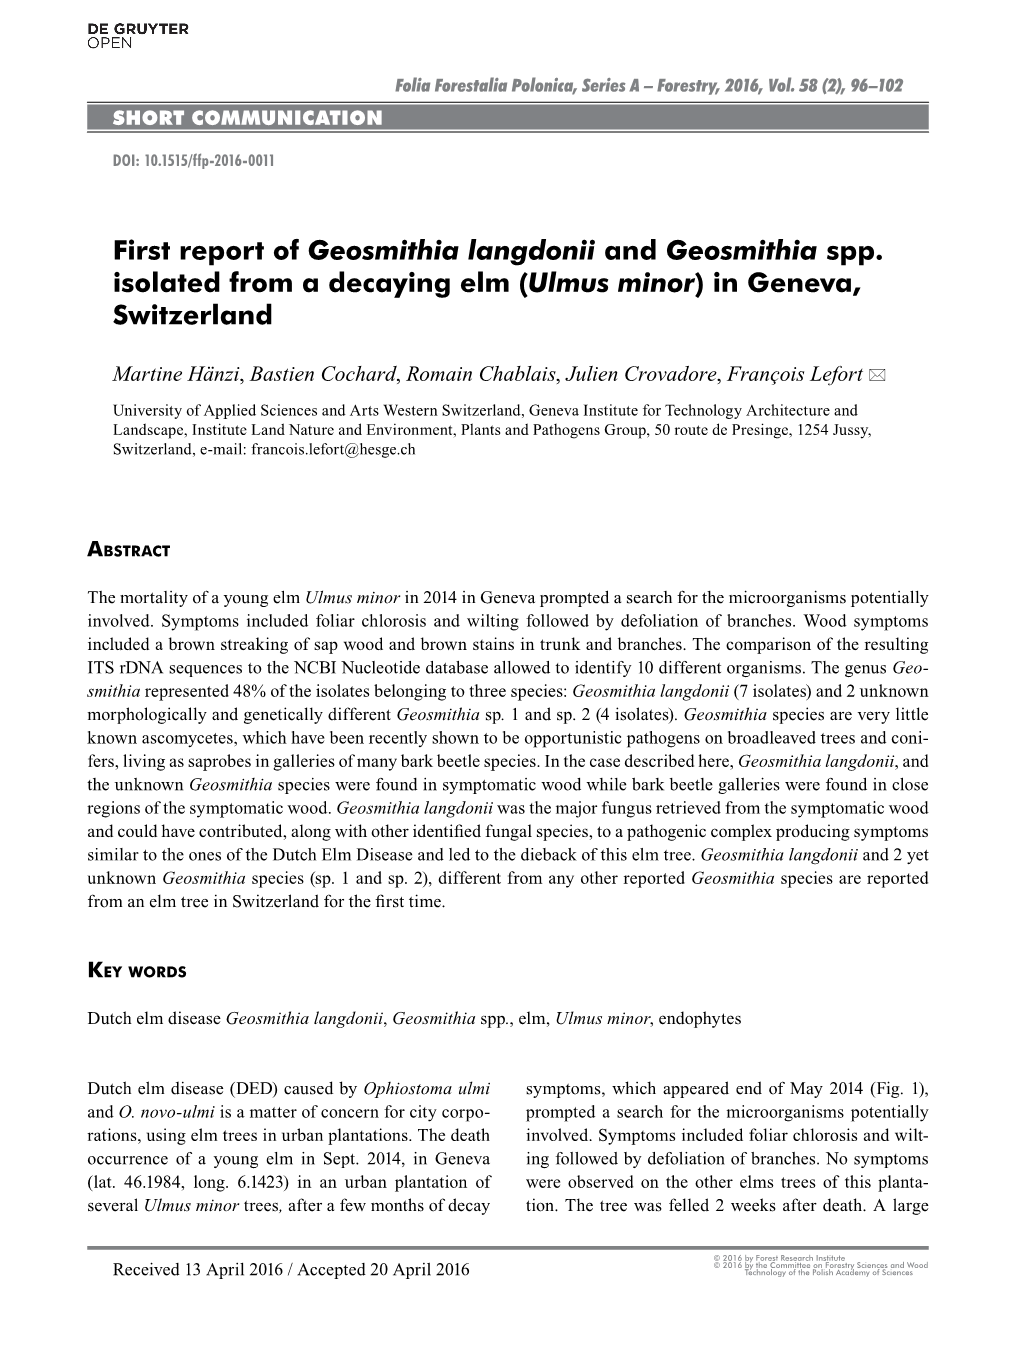 First Report of Geosmithia Langdonii and Geosmithia Spp. Isolated from a Decaying Elm (Ulmus Minor) in Geneva, Switzerland